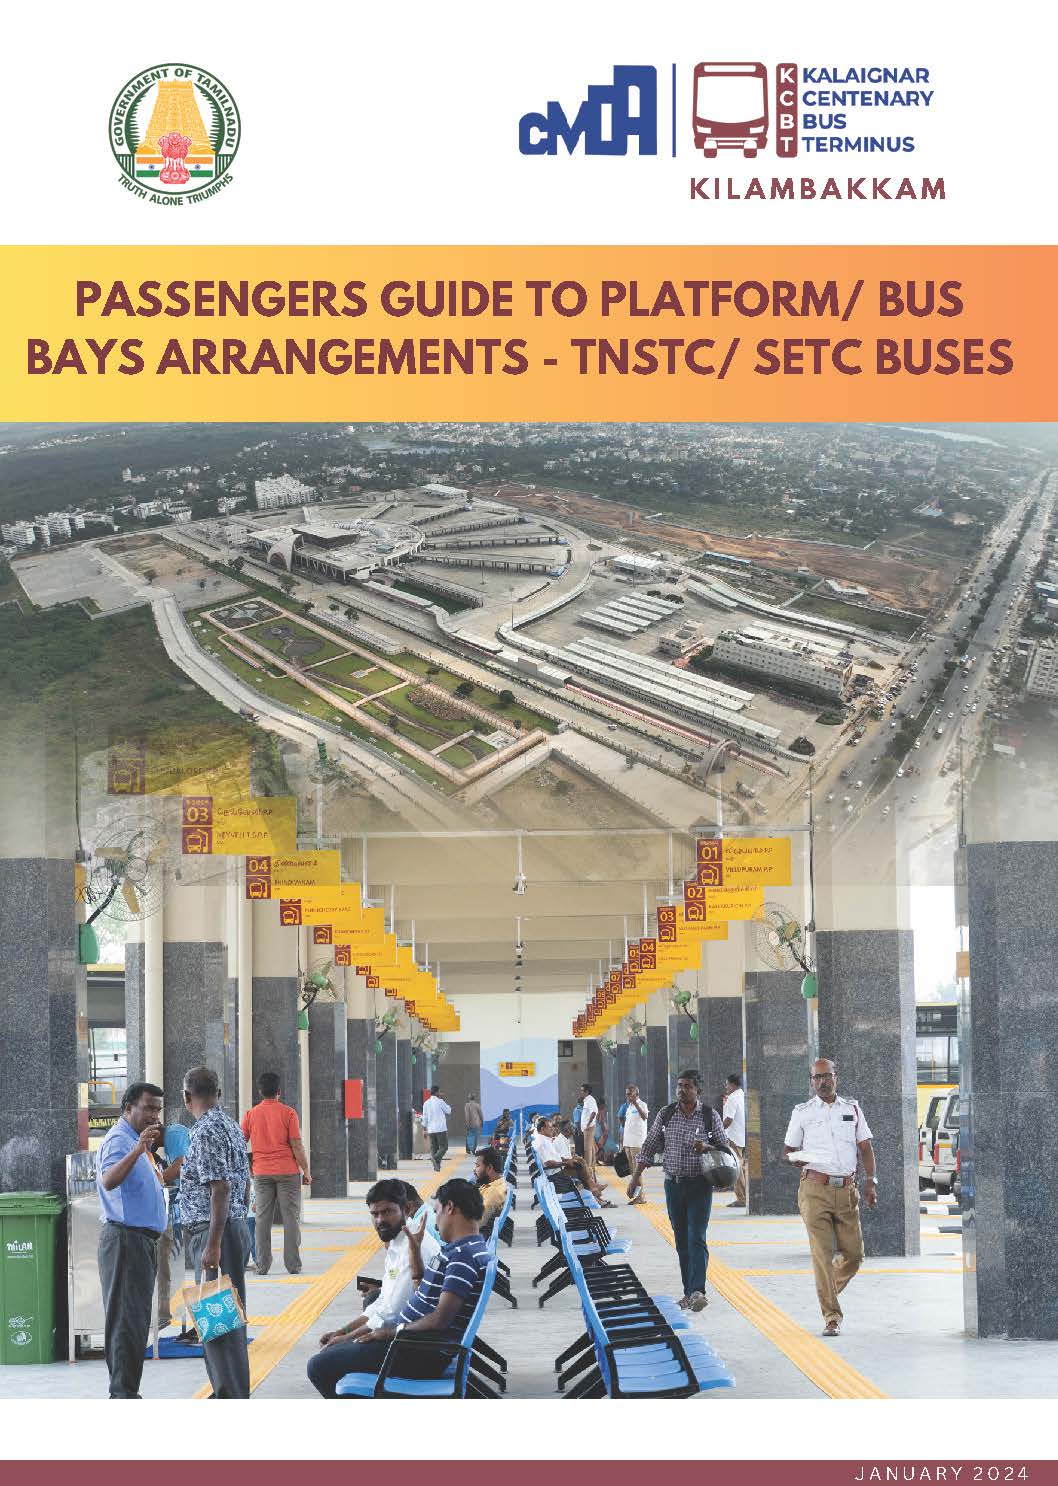 Kilambakkam KCBT - Passengers guide to the platform bus bays arrangements - English